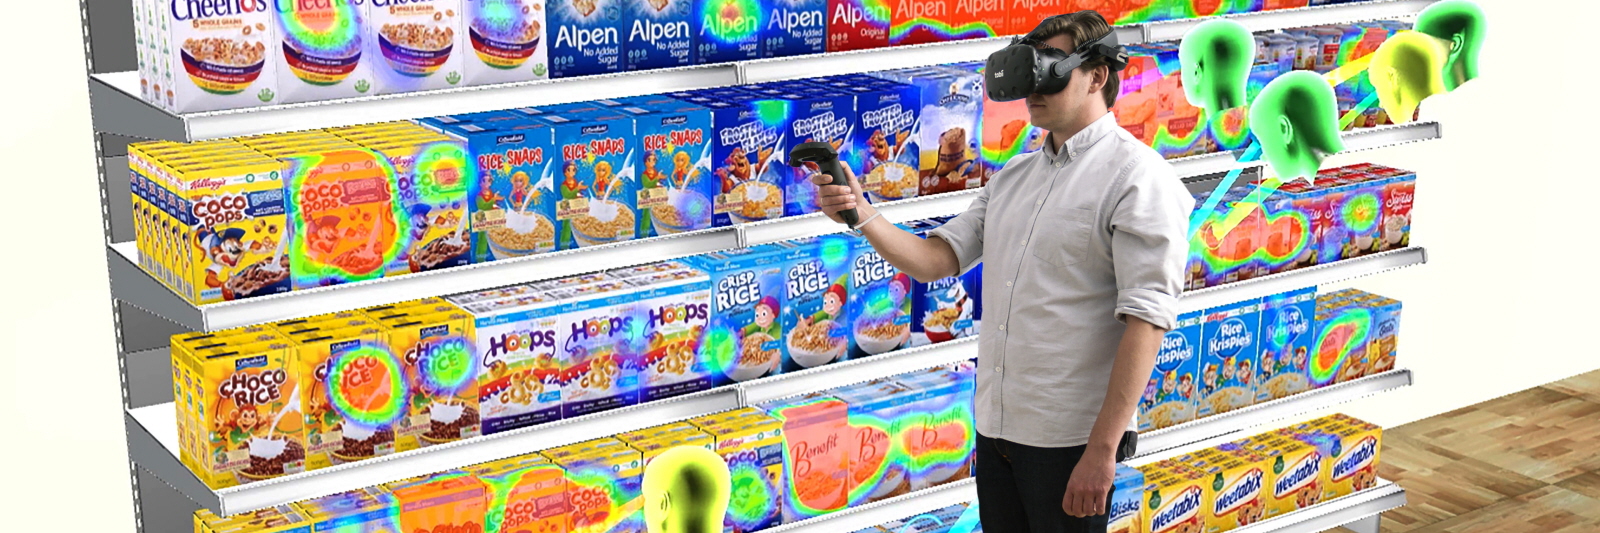 VR eye tracking supermarket headset